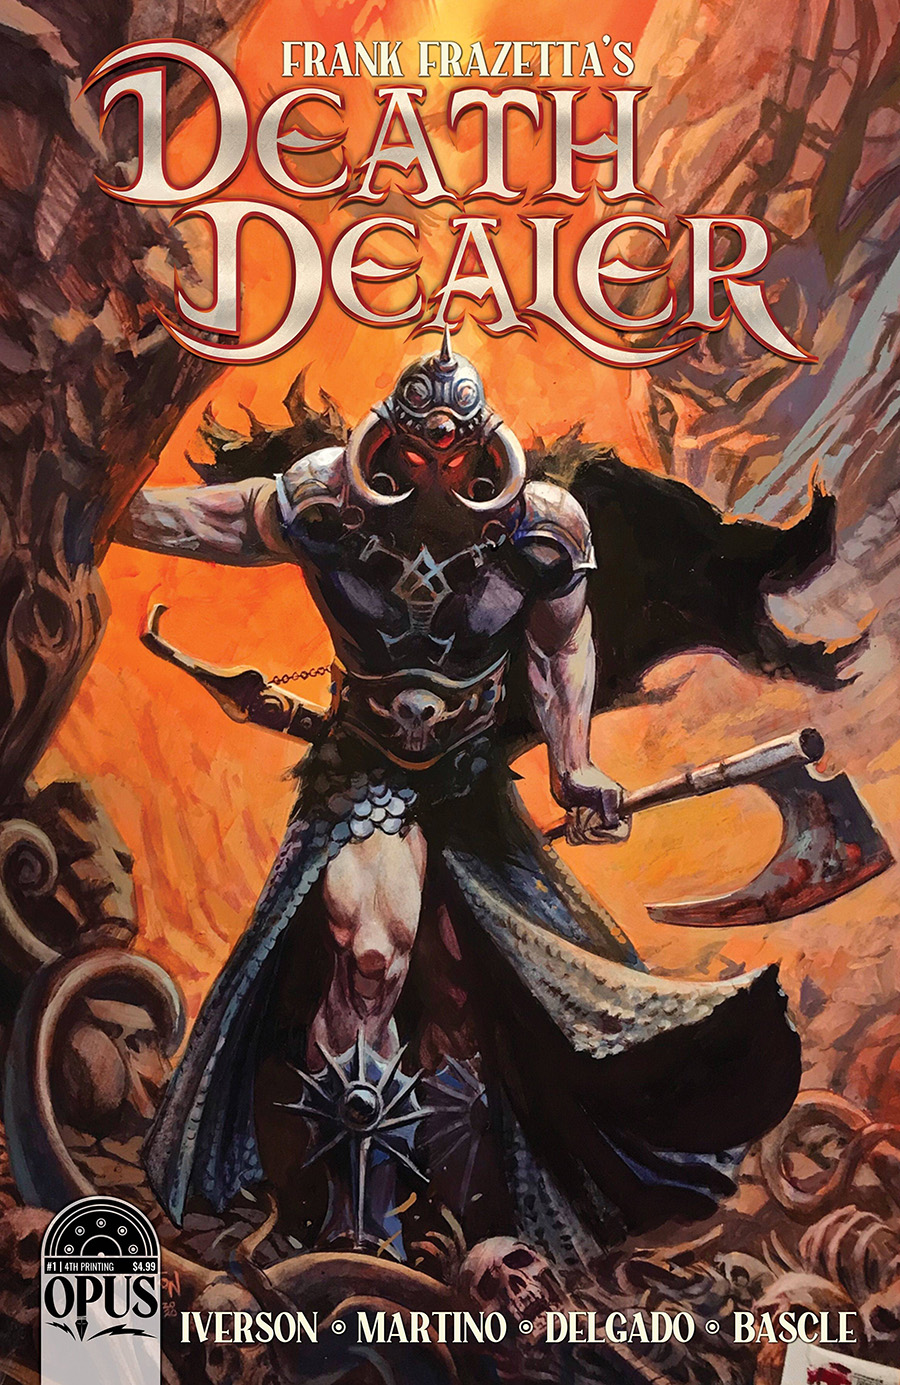 Frank Frazettas Death Dealer Vol 2 #1 Cover J 4th Ptg Dan Brereton Variant Cover